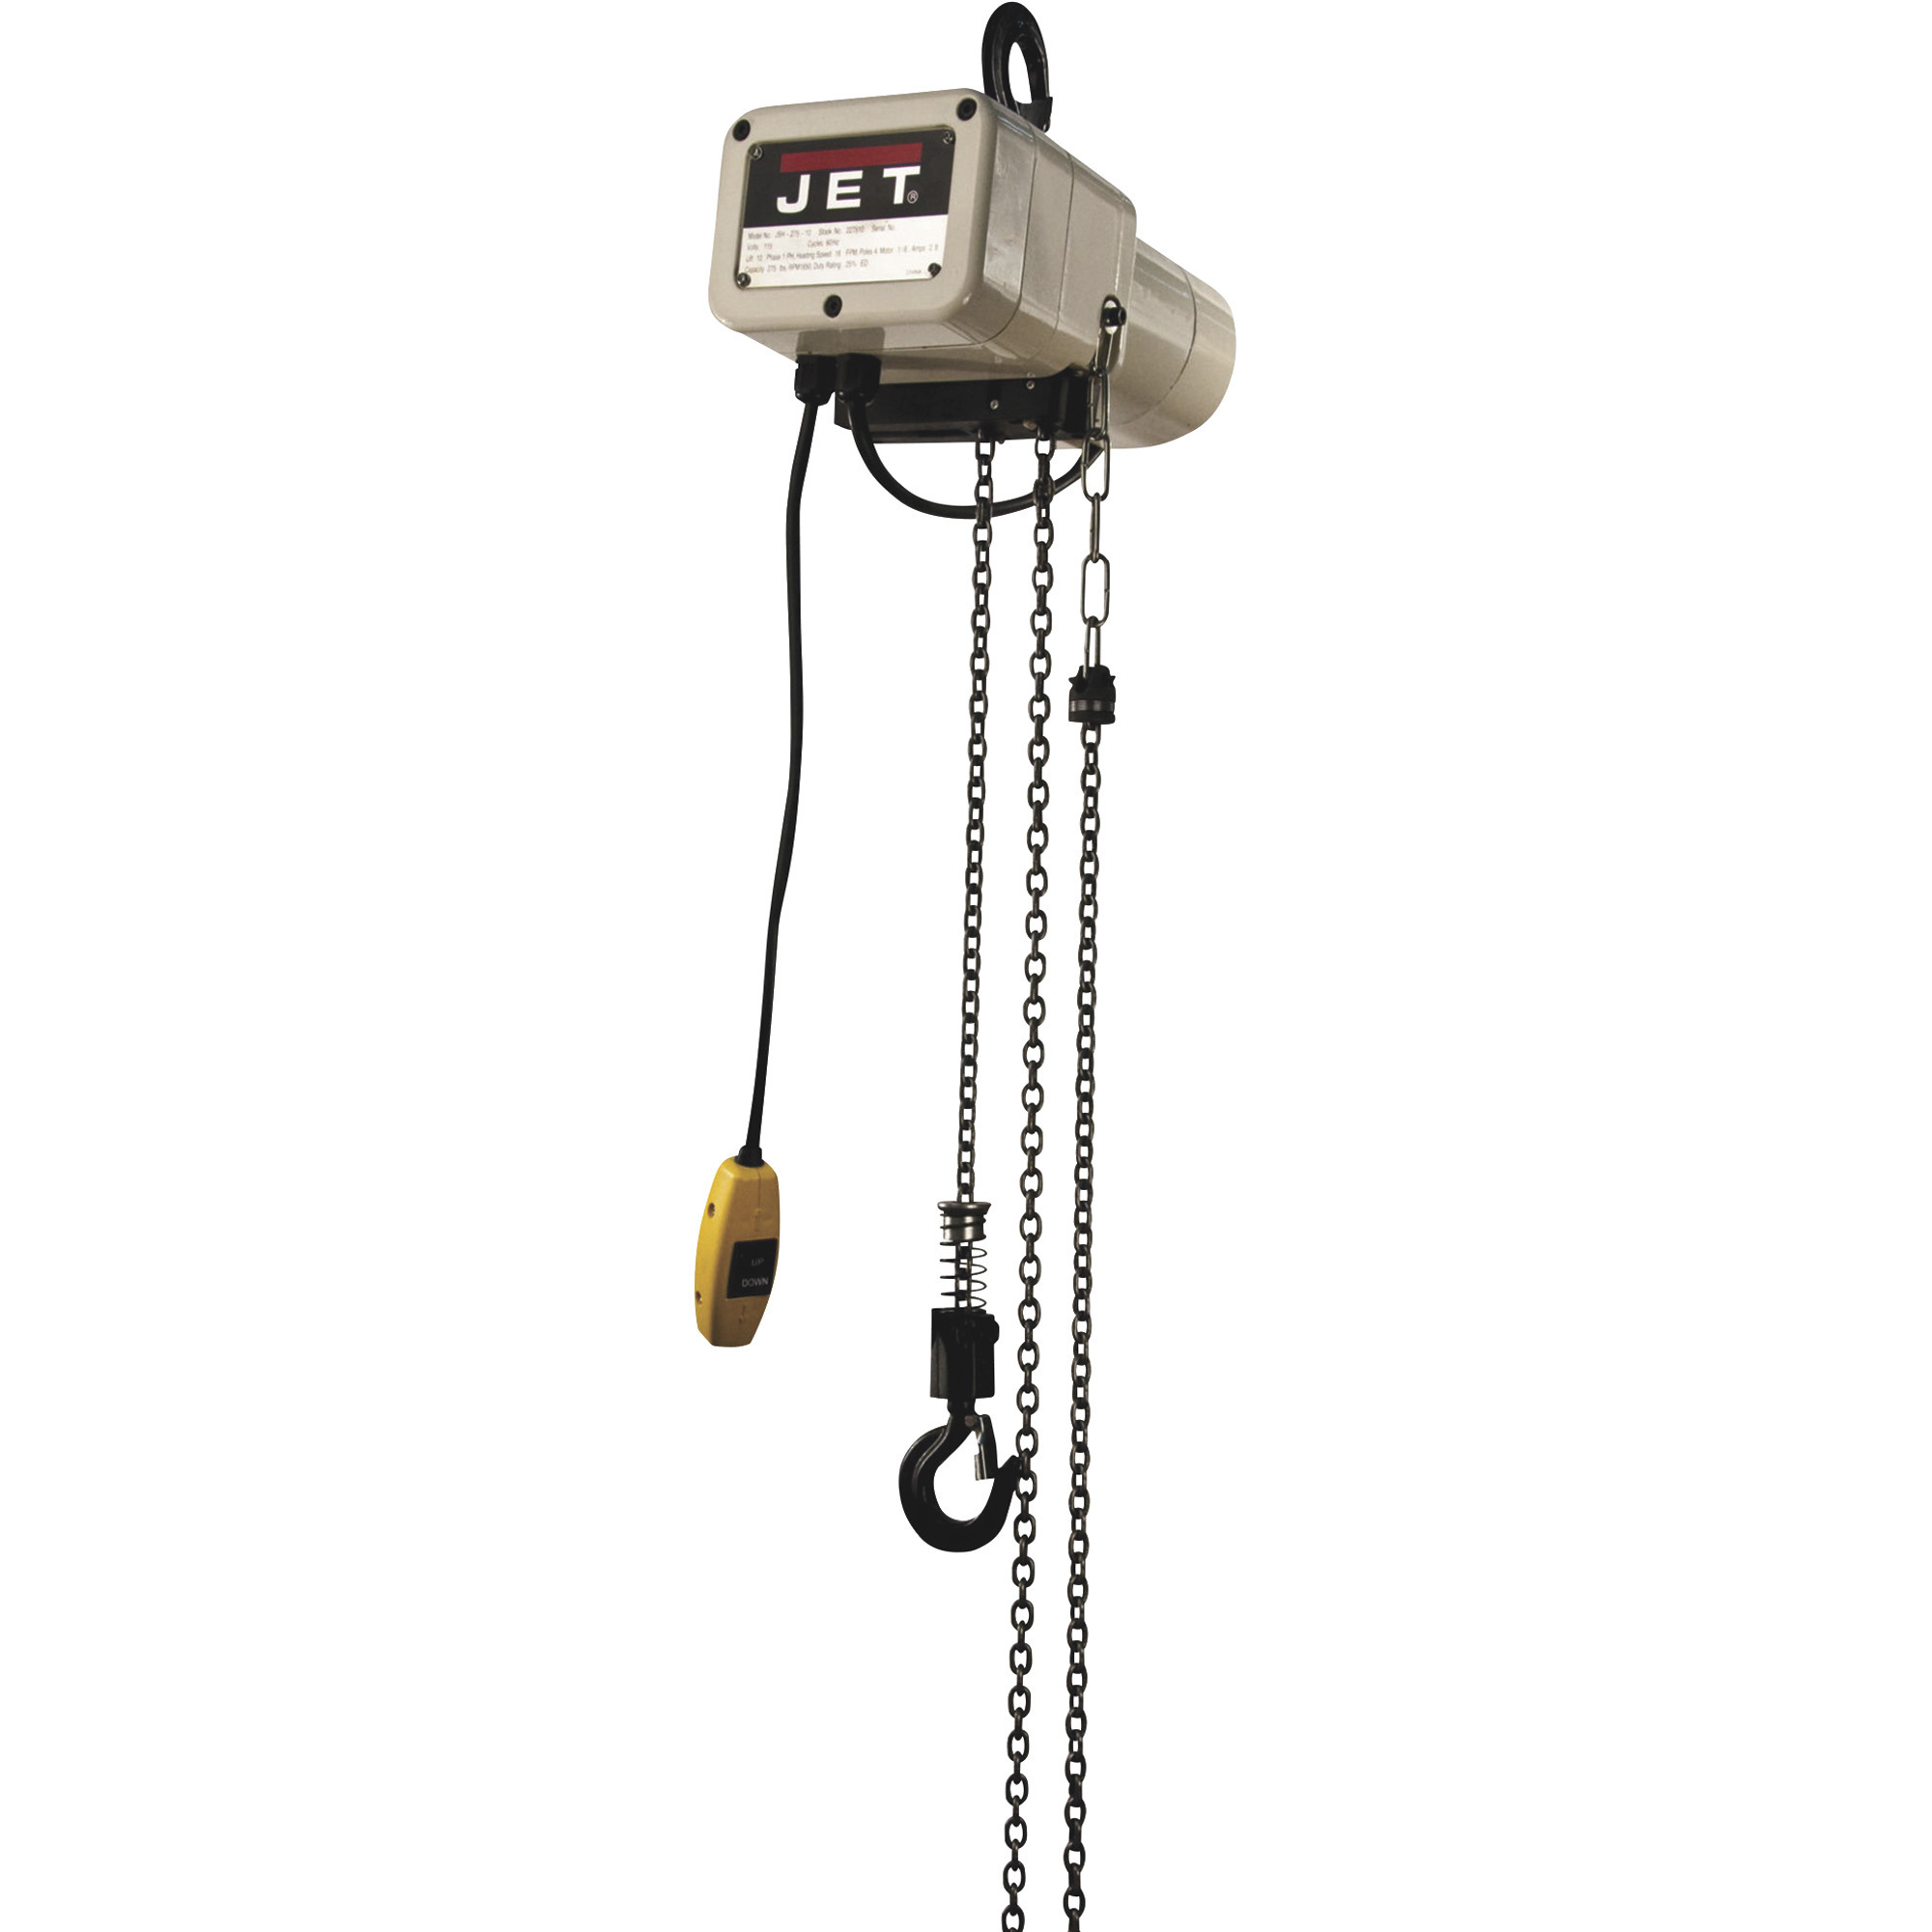 JET JSH Series Electric Chain Hoist, 1/8-Ton Capacity, 10ft. Lift, 1-Phase, Model JSH-275-10